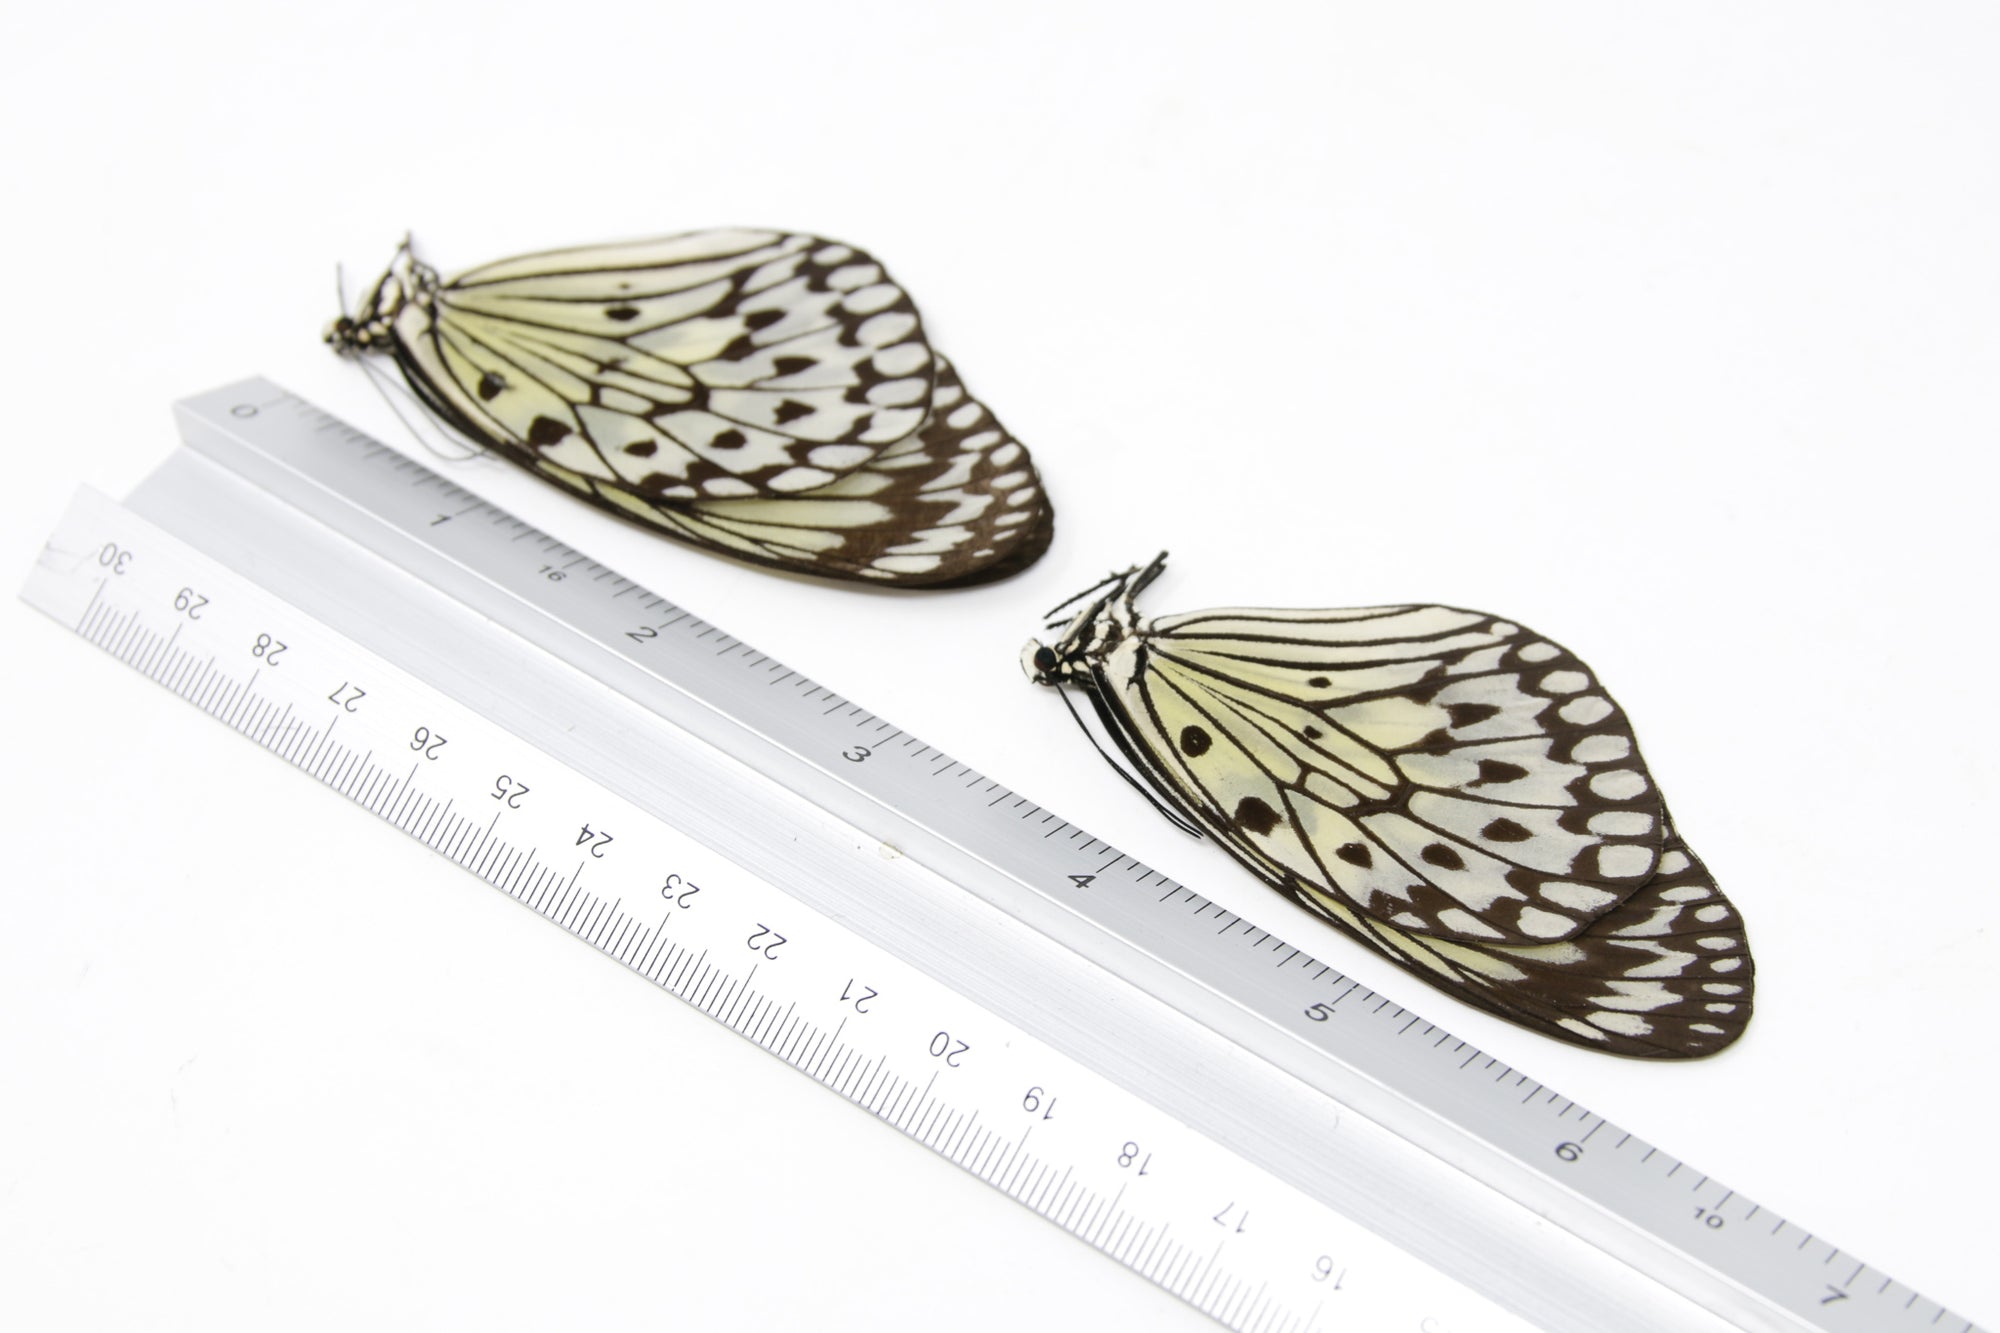 TWO (2) Idea leuconoe | The Paper Kite | Dry-preserved Butterfly Specimens